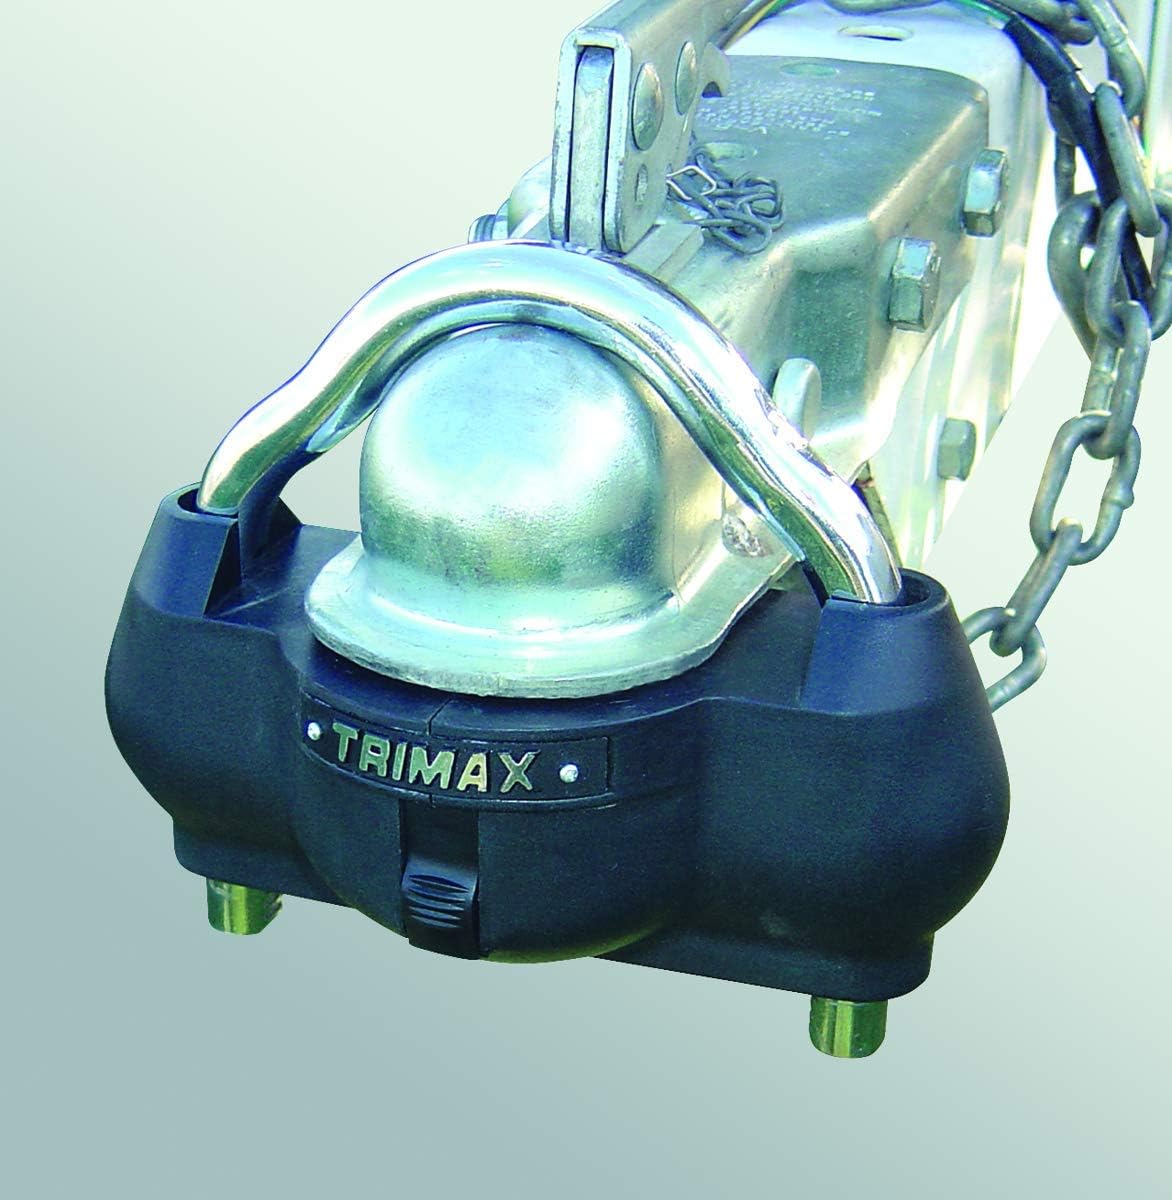 Trimax UMAX100 Premium Universal Solid Hardened Steel Trailer Lock (Fits All couplers)